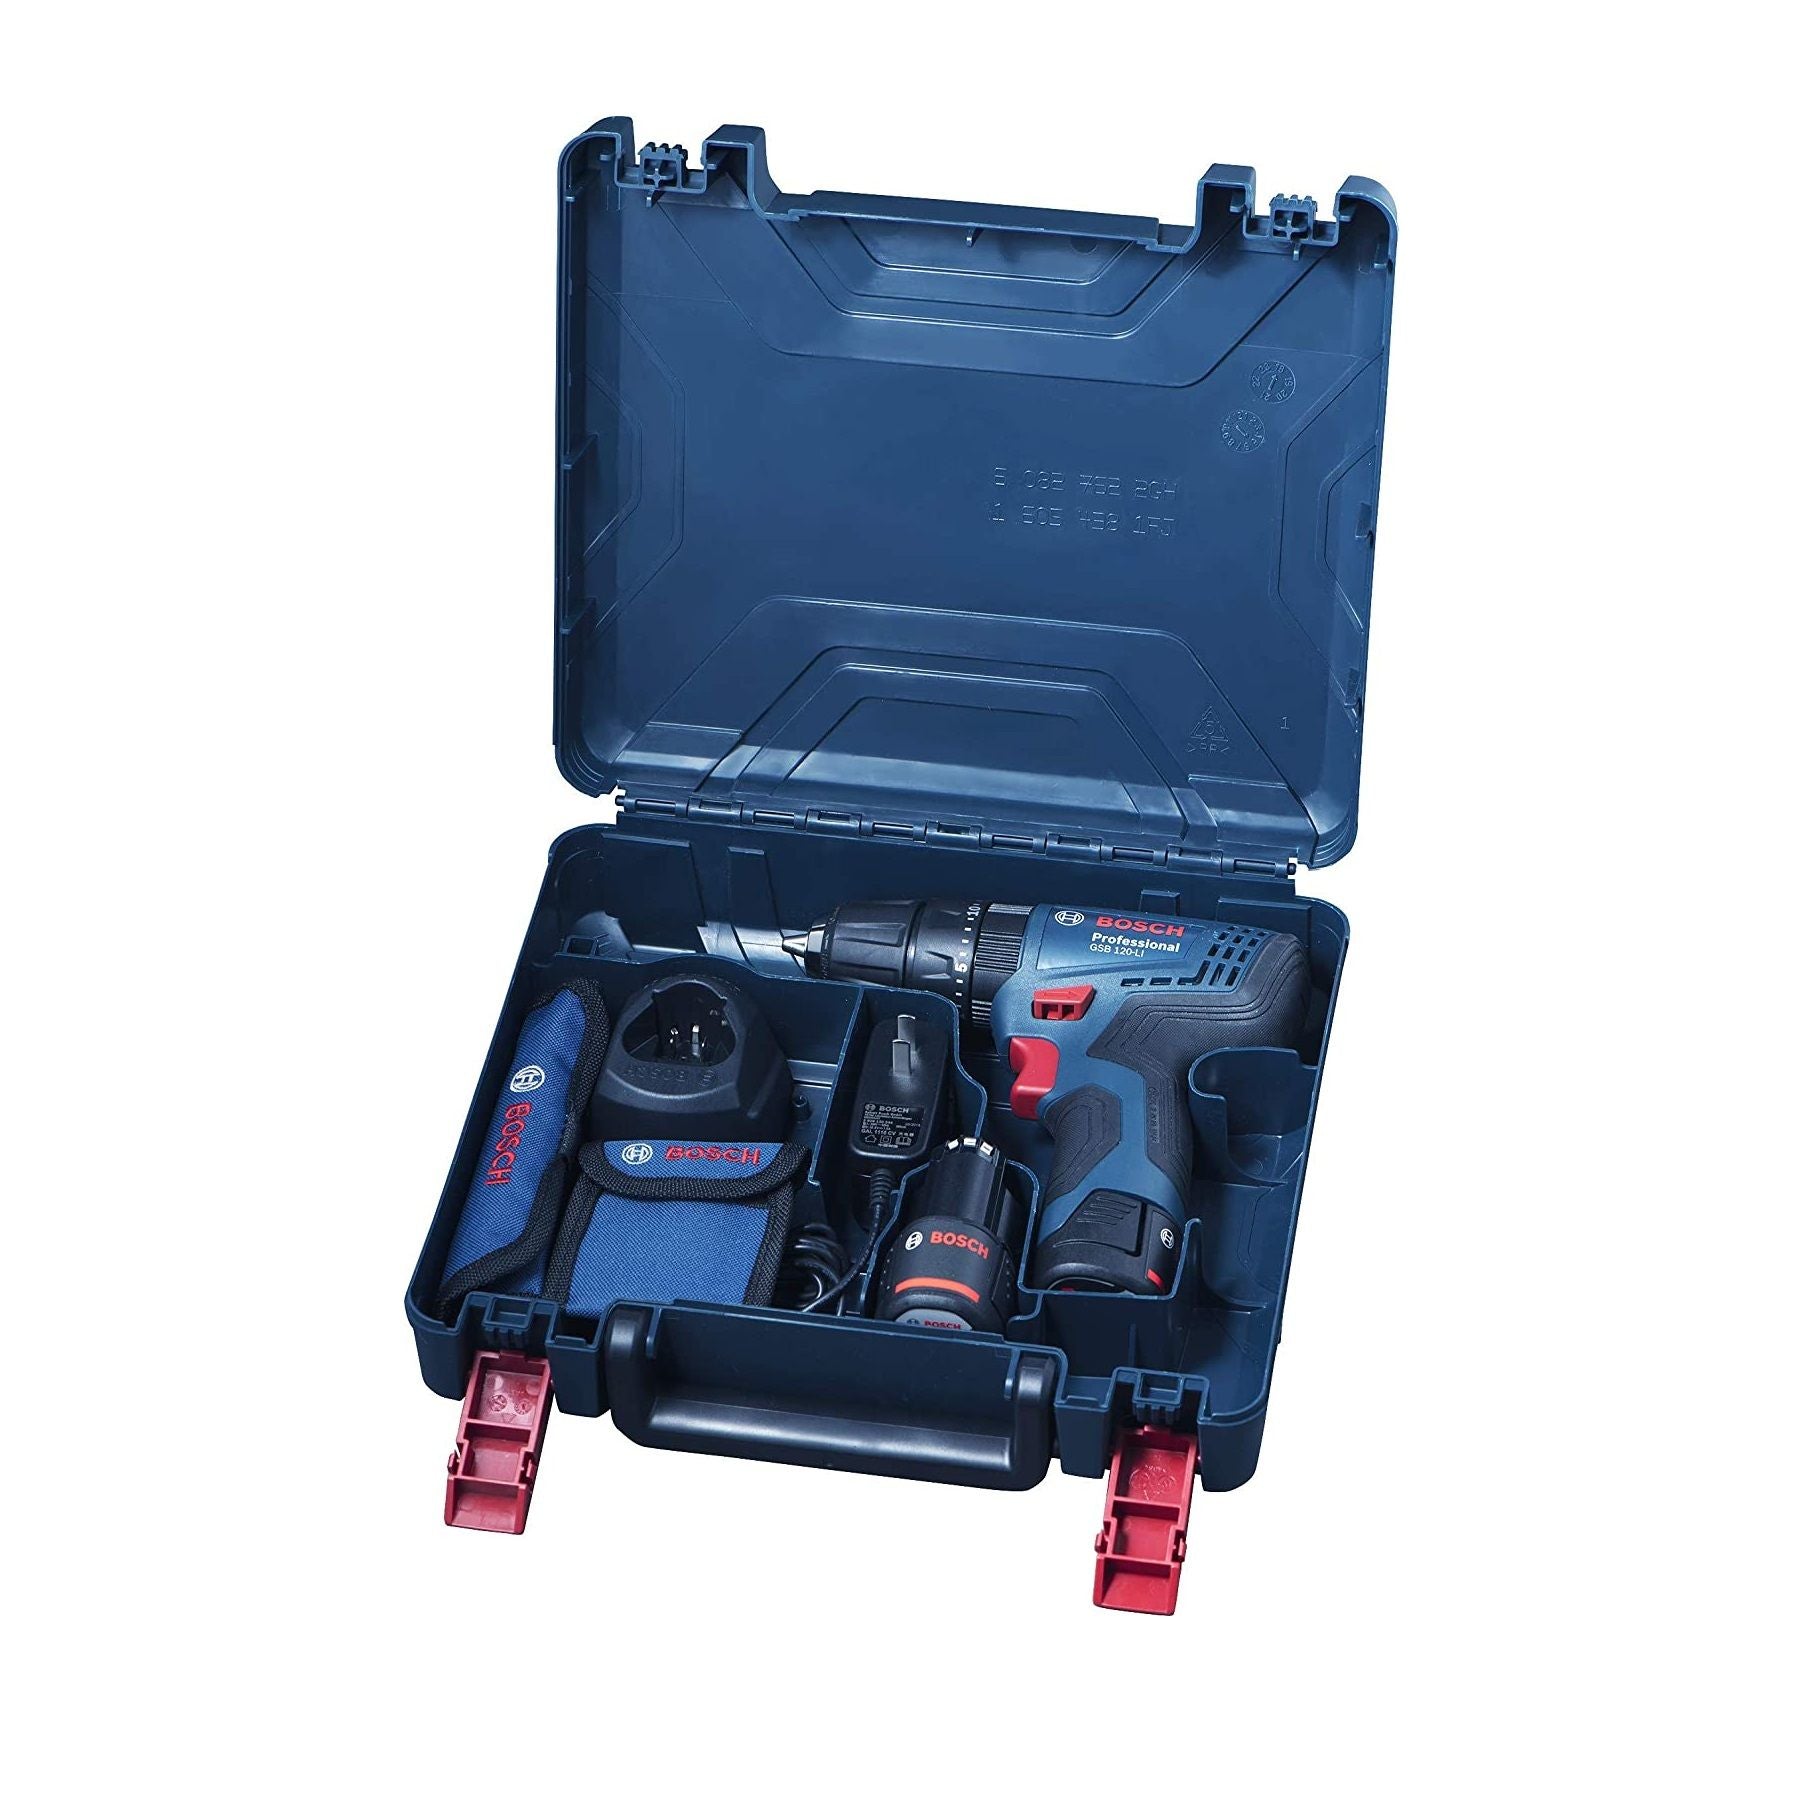 Bosch Double Battery Professional Cordless Drill Driver GSB 120 Li